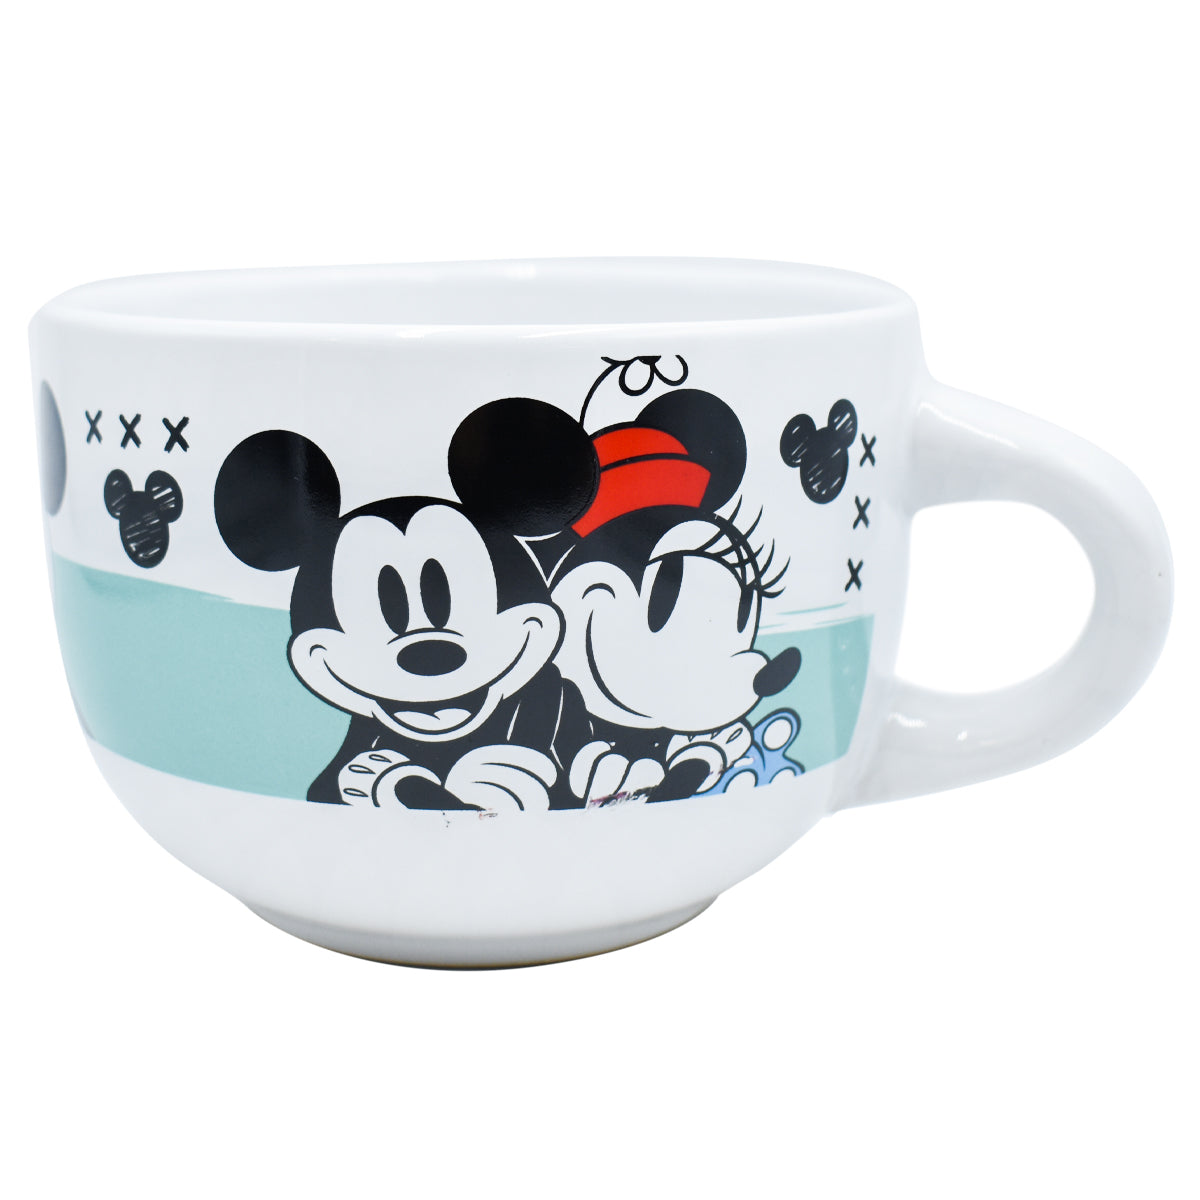 Fun Kids Tarro Jumbo De Ceramica: Disney Mickey Mouse - Mickey y Minnie